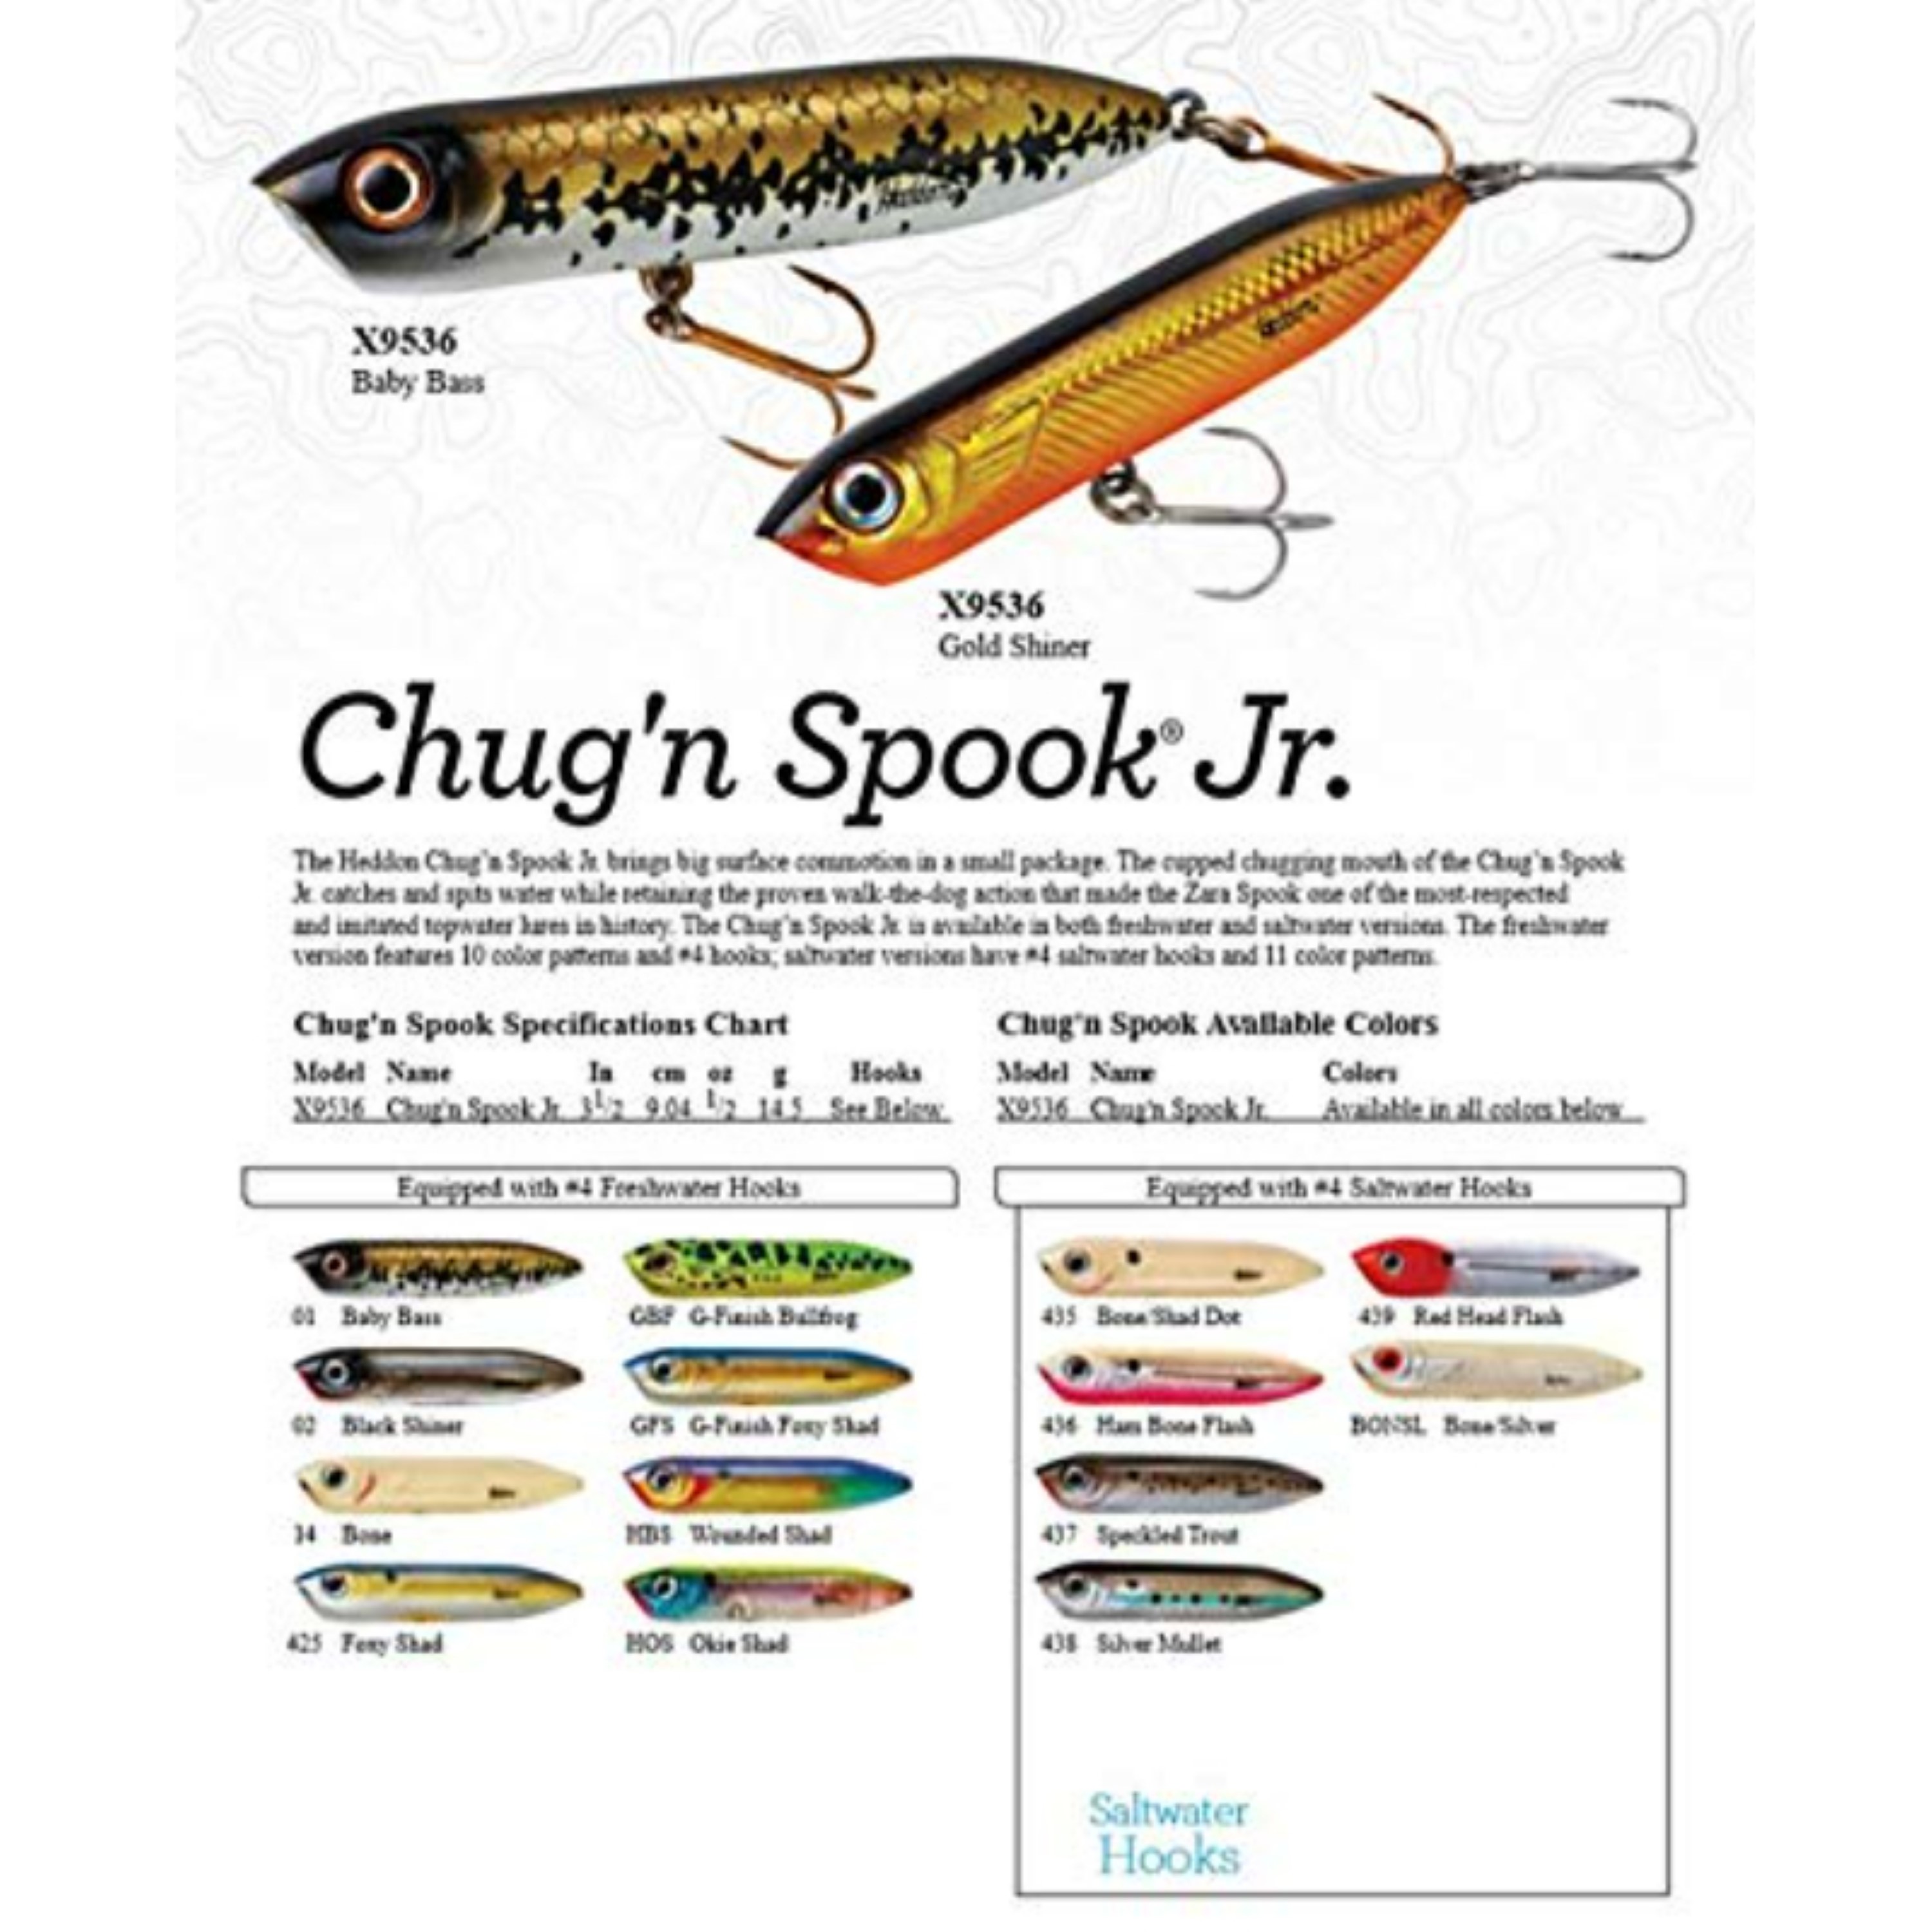 Heddon Chug'n Spook Junior Fishing Lure, G-finish Bullfrog, 1/2 Oz, Wholesale Prices